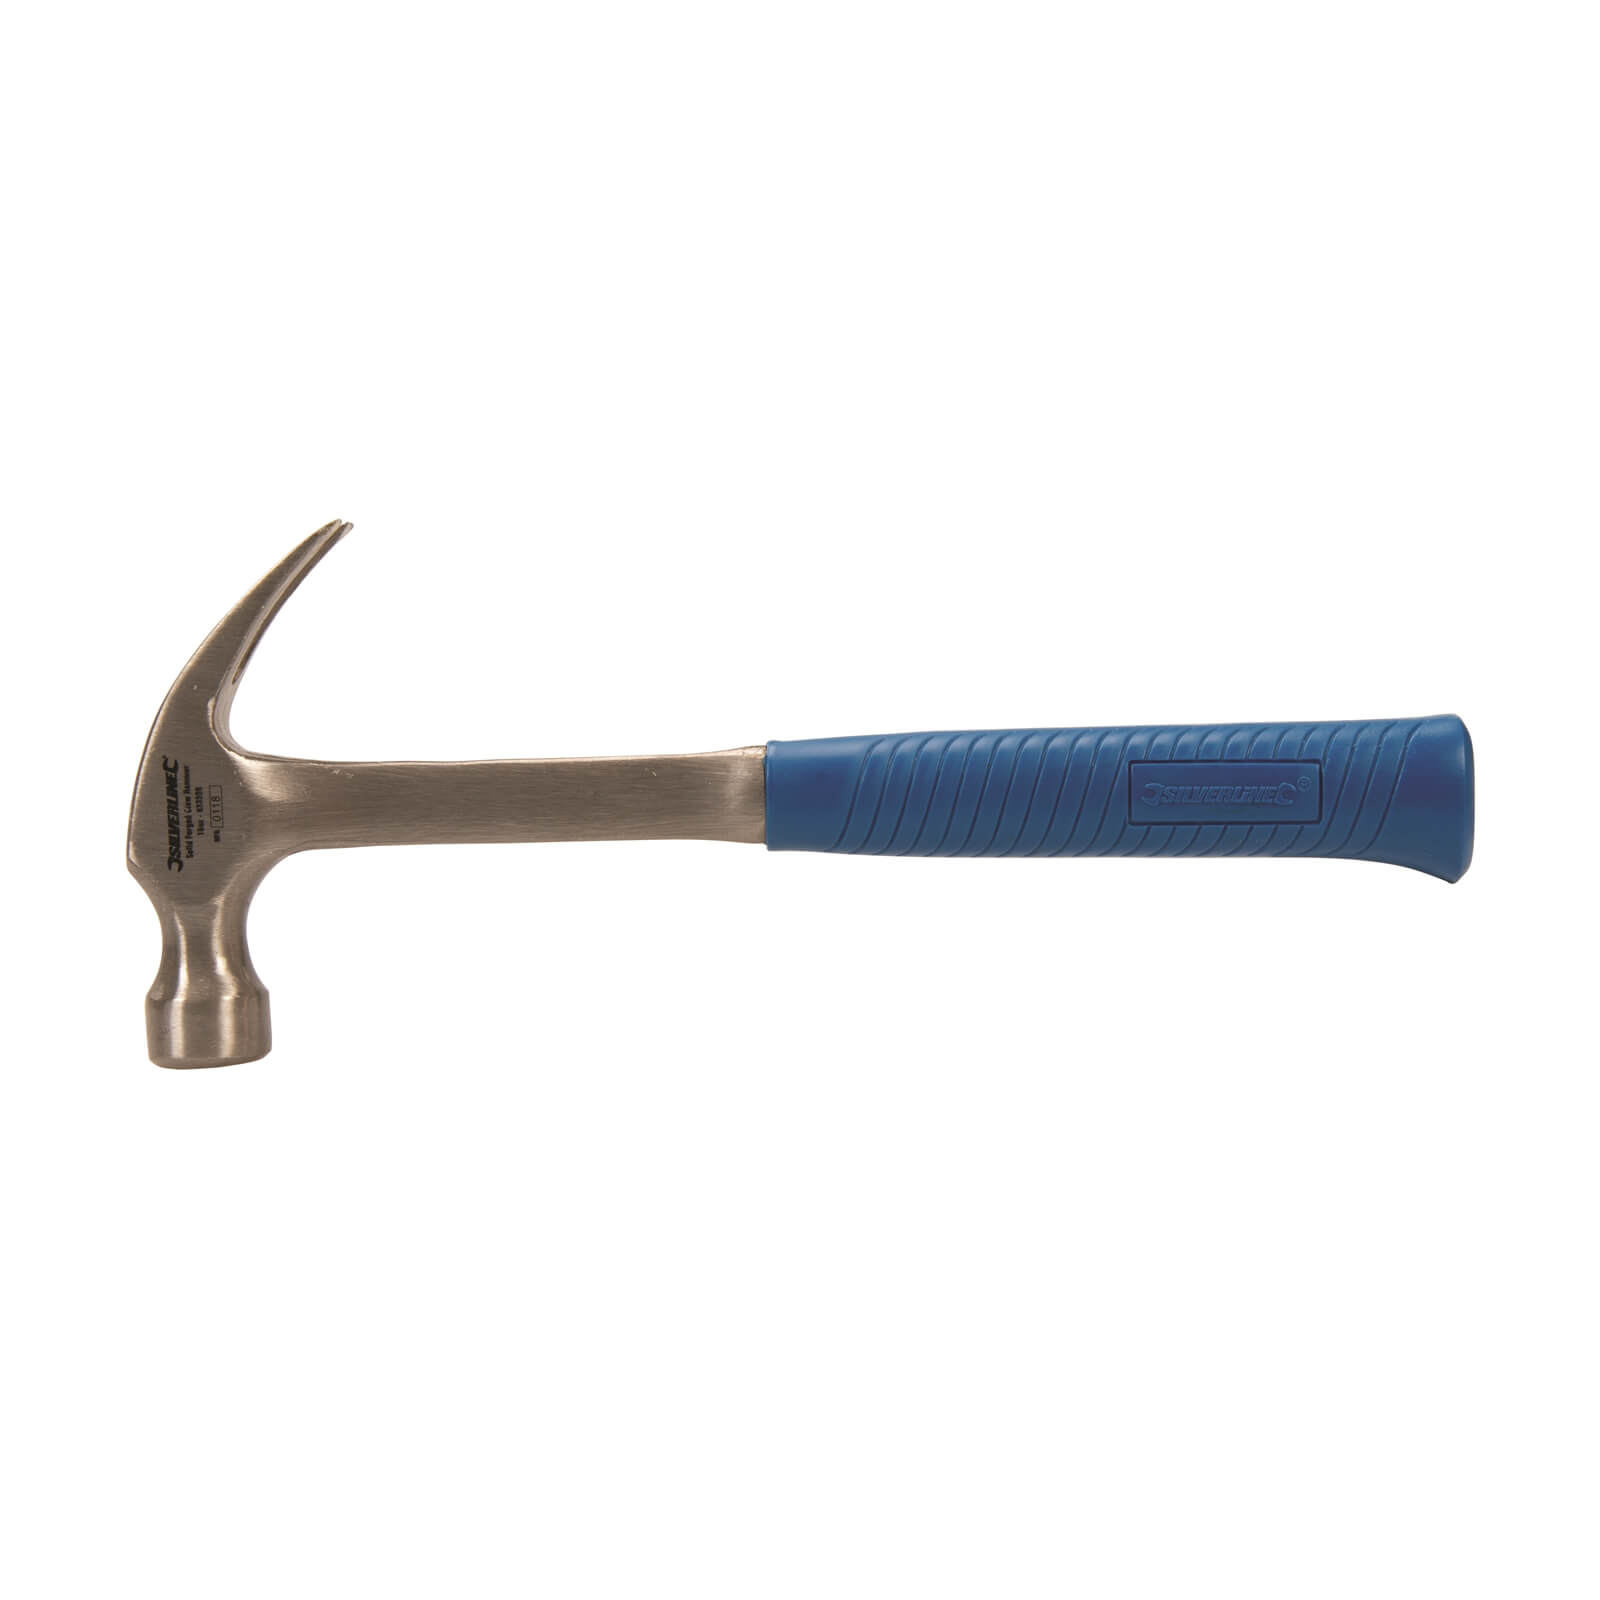 Silverline Solid Forged Claw Hammer - 16oz (454g)